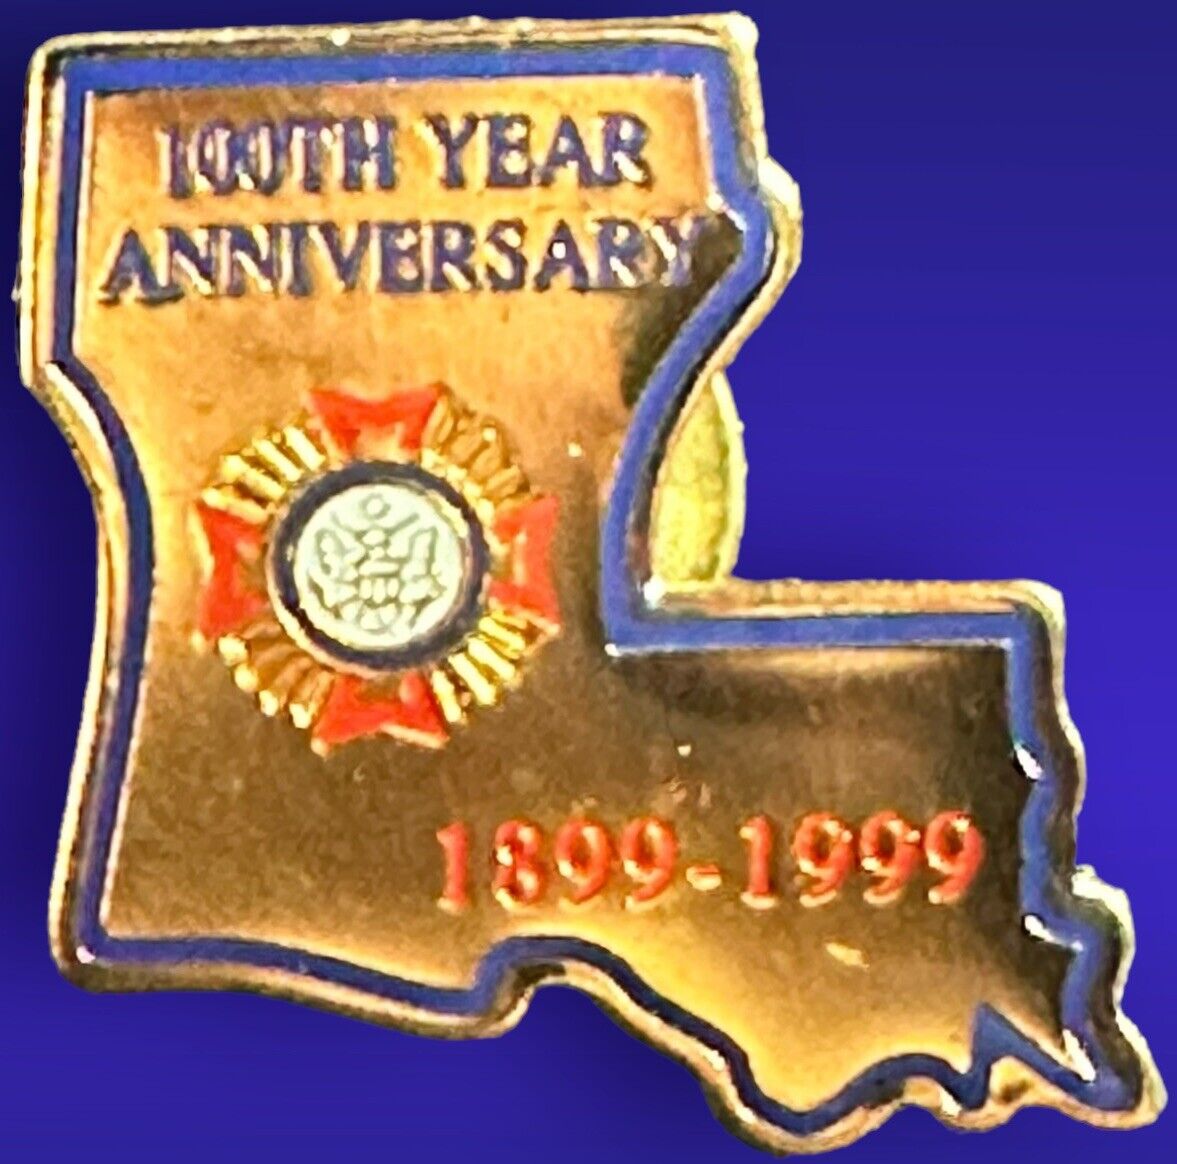 Louisiana VFW Veterans Of Foreign Wars 1899-1999 100th Year Anniversary PinBack.